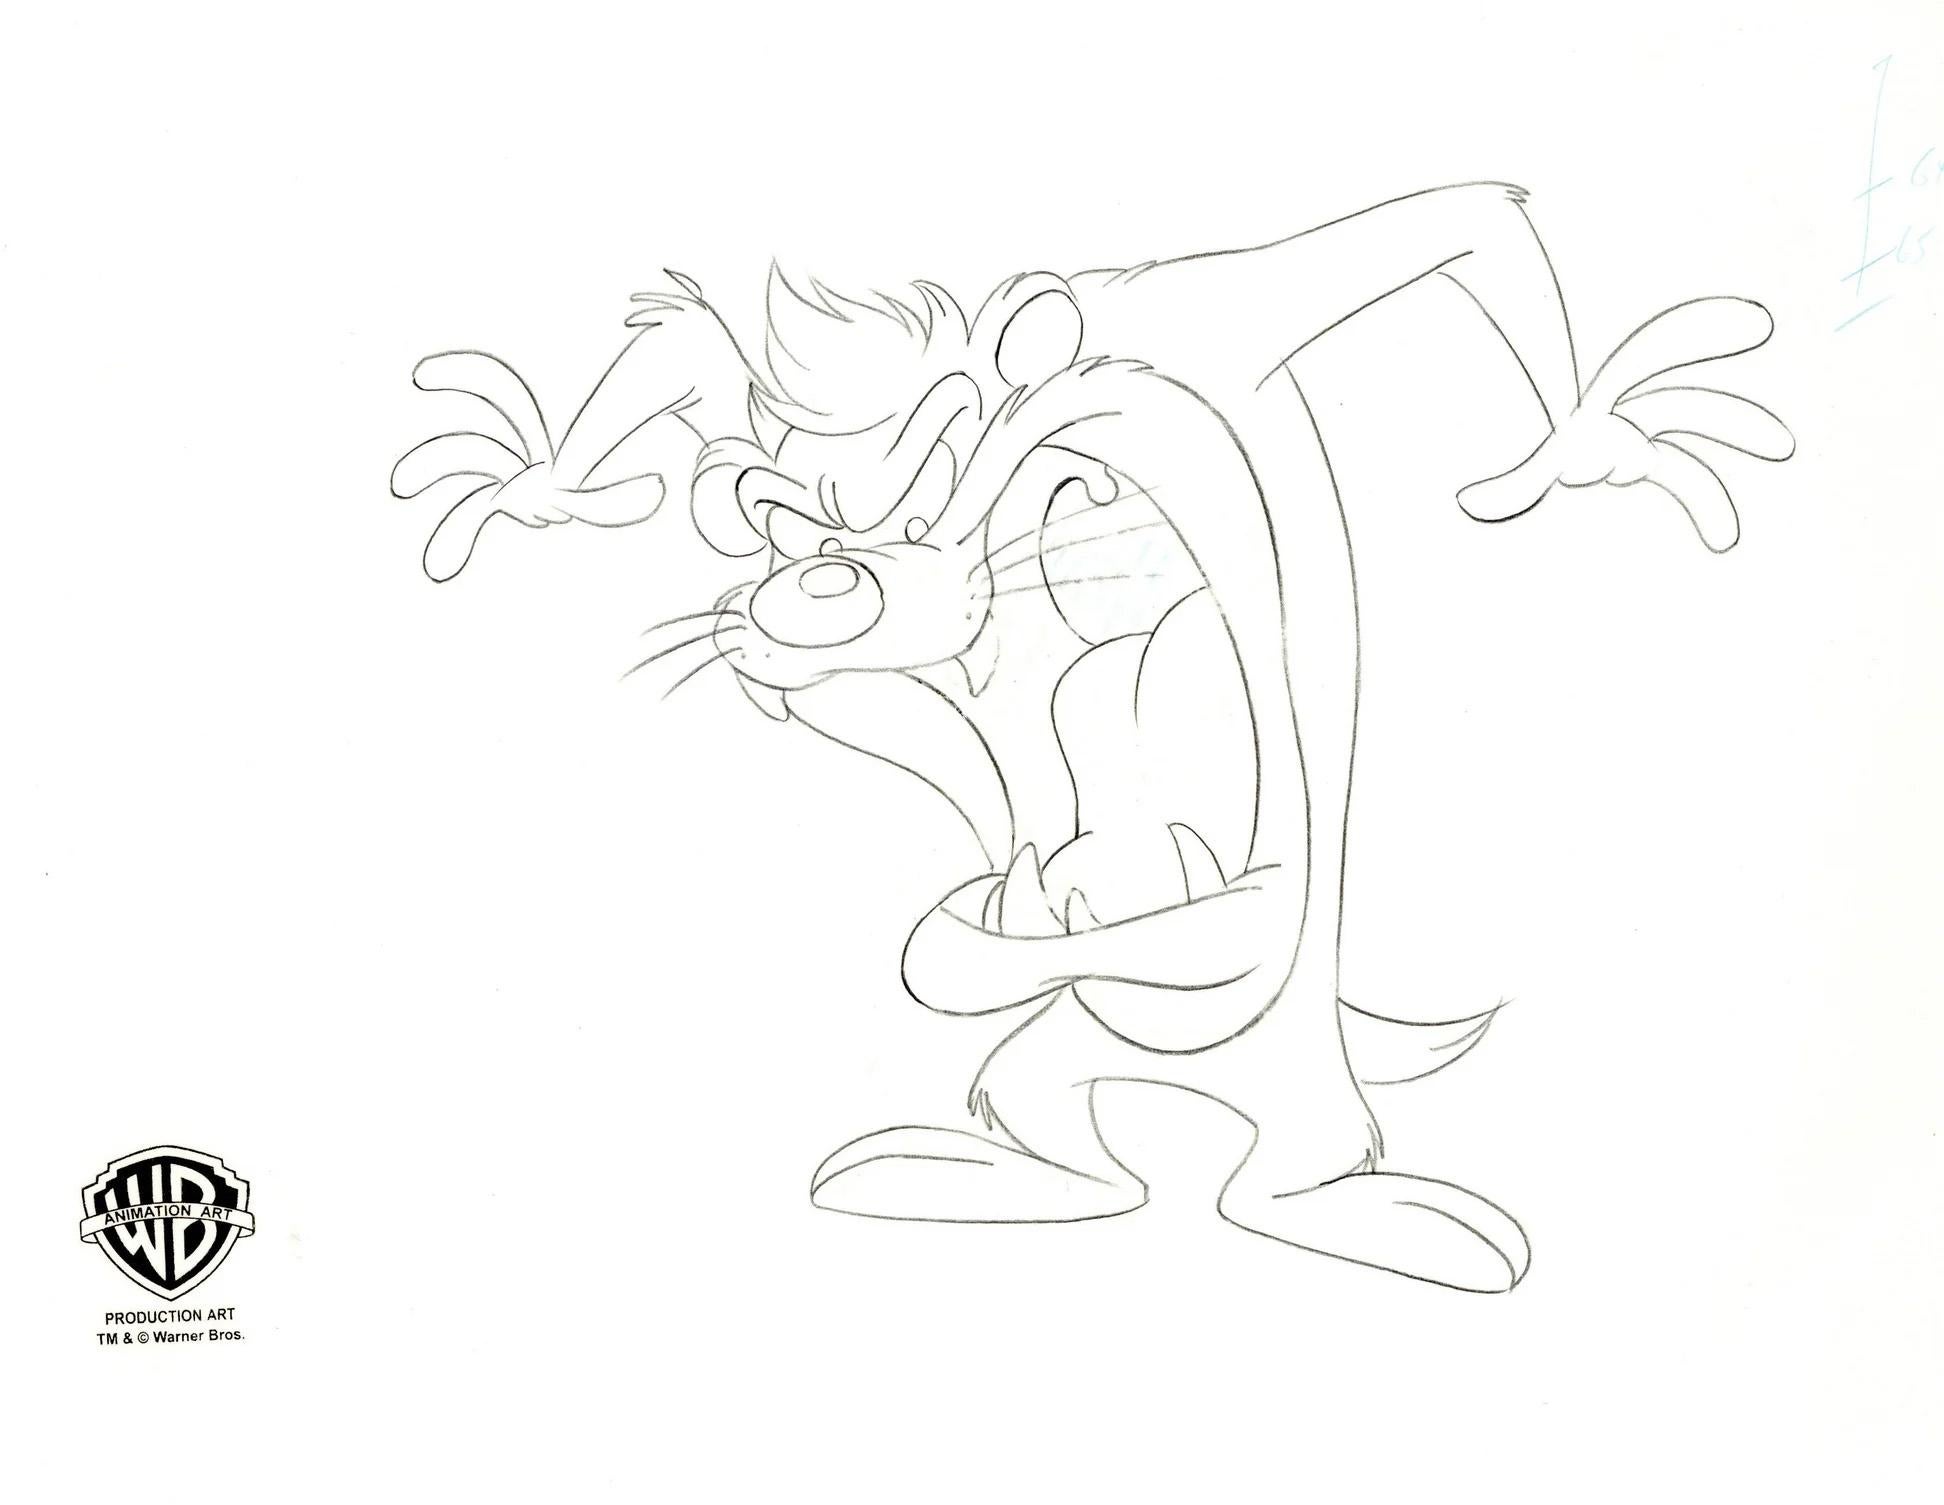 Looney Tunes Original Production Drawing: Tasmanian Devil - Art by Looney Tunes Studio Artists